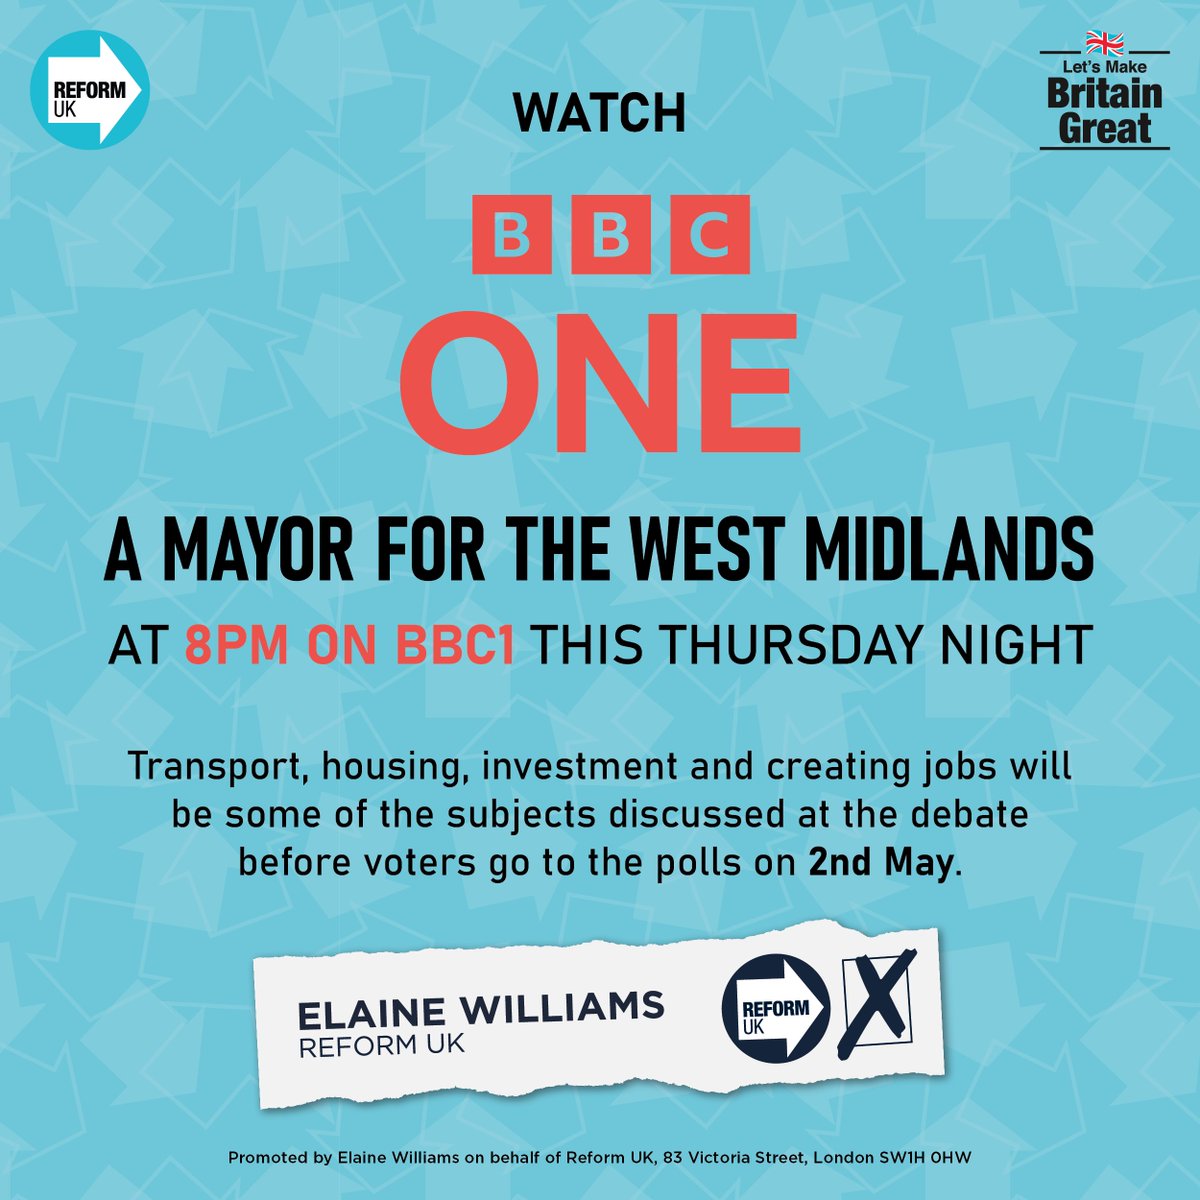 @ElaineWestMids Support Elaine Williams your Reform UK candidate to be Mayor of the West Midlands ElaineWilliams.co.uk Thurs 25th April